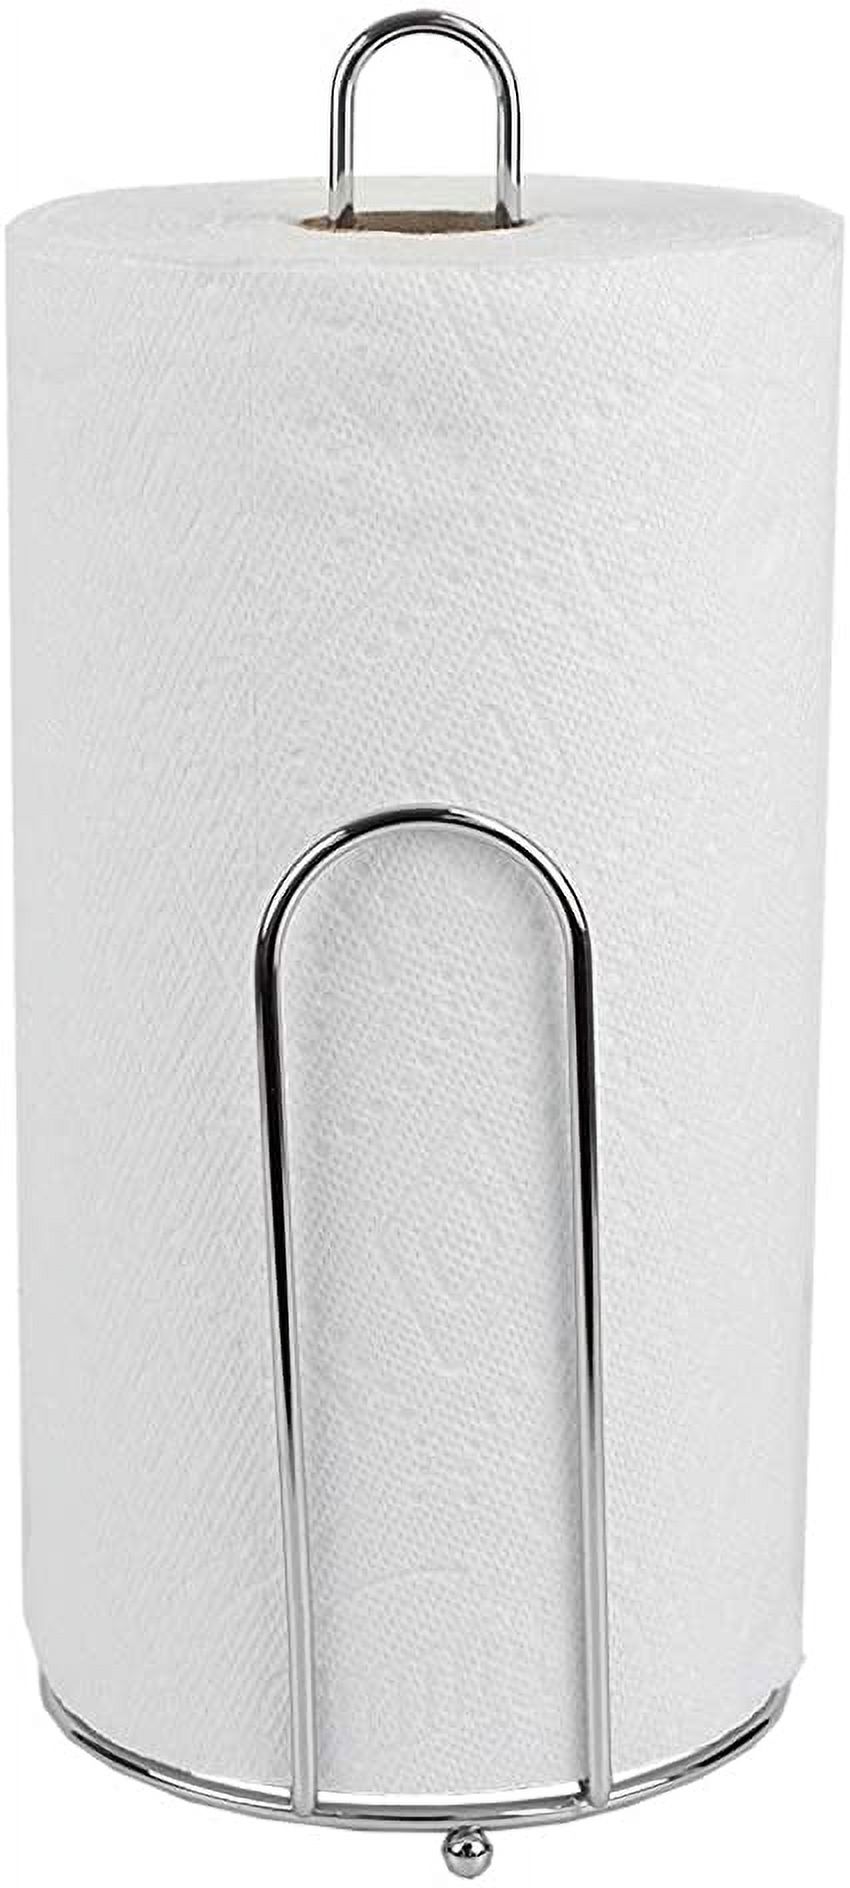 Home Basics Chrome-Plated Steel Paper Towel Holder - image 1 of 9